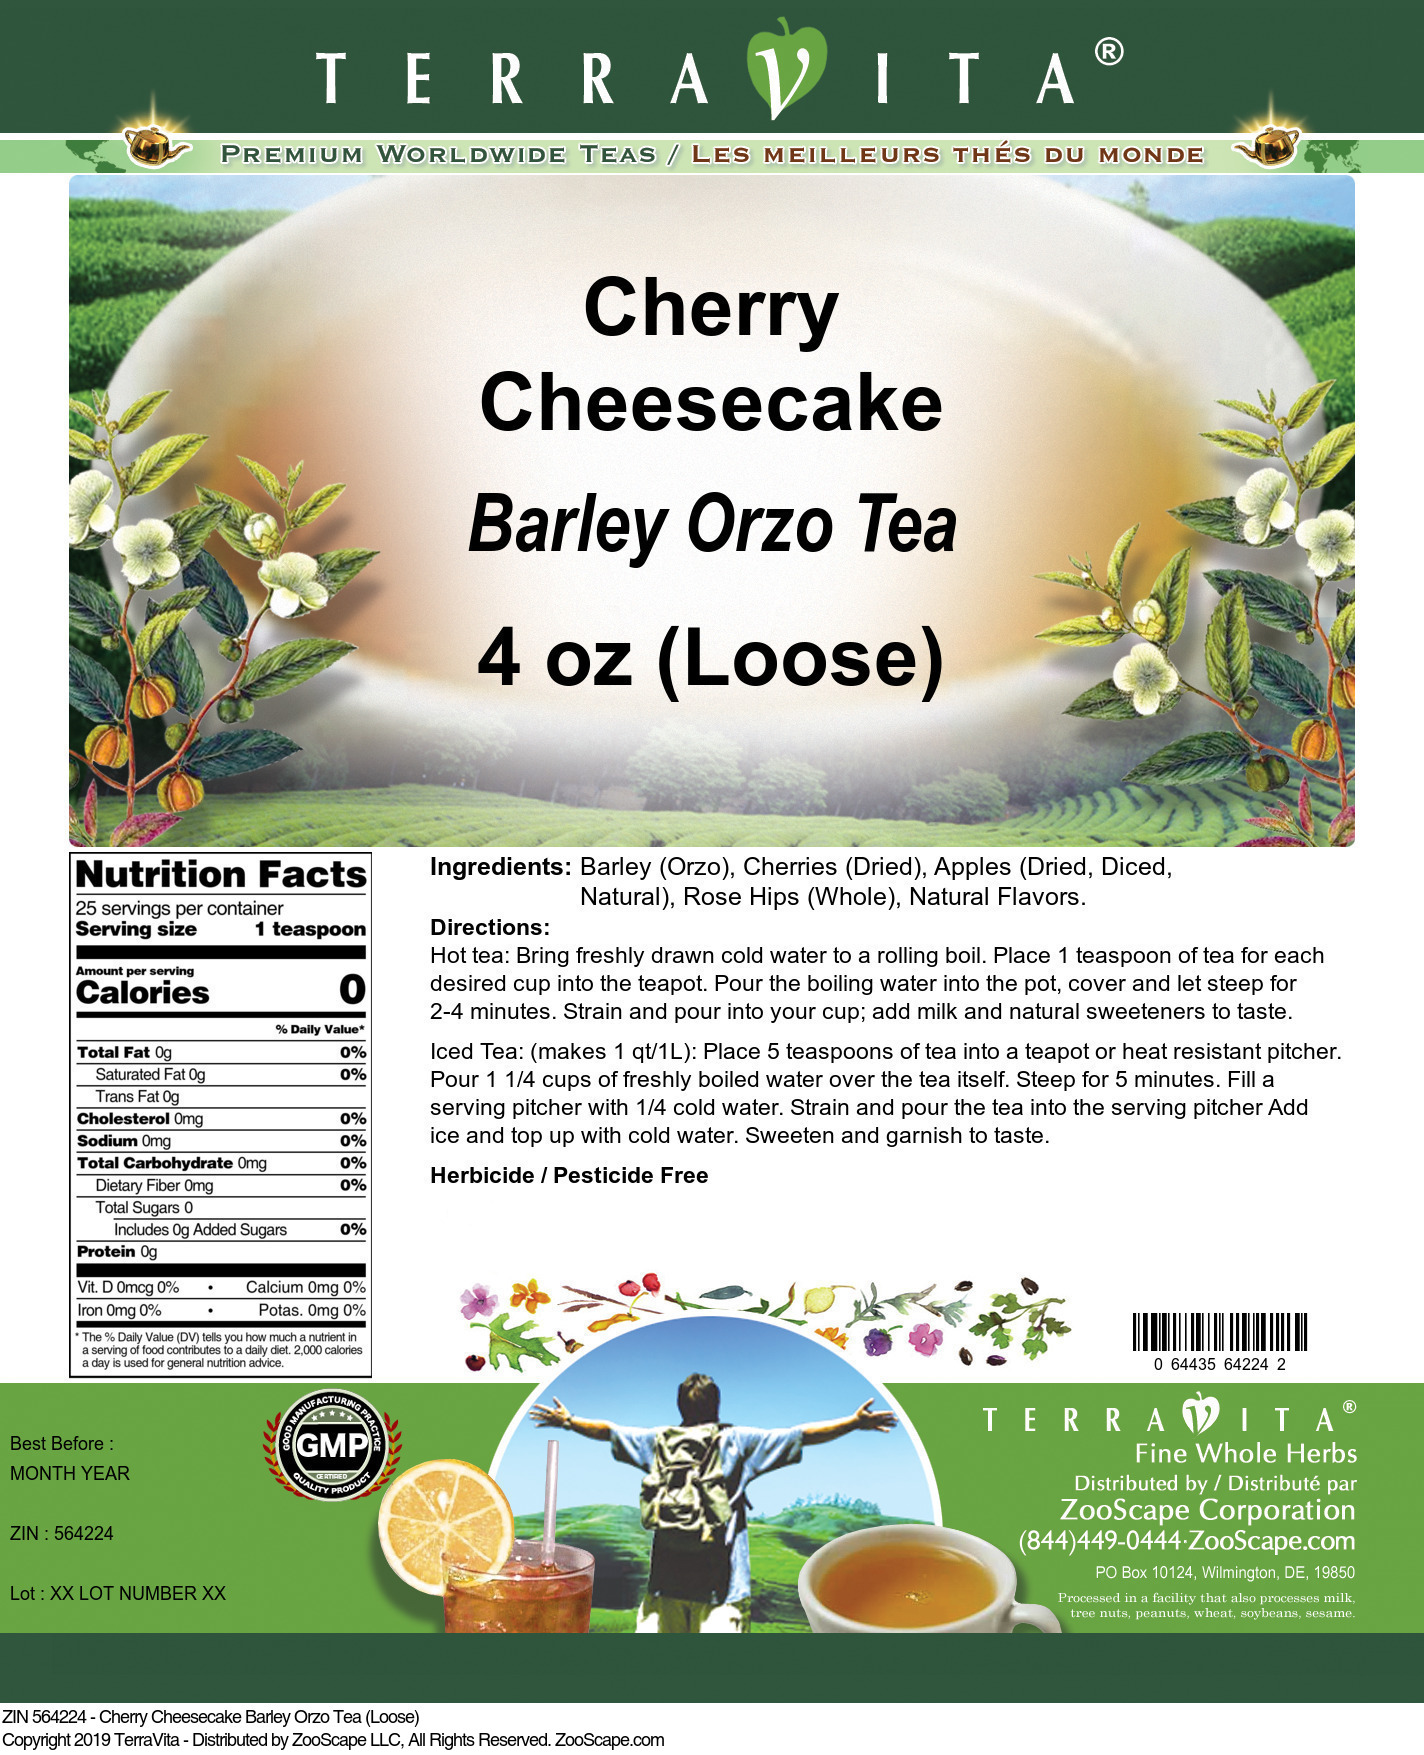 Cherry Cheesecake Barley Orzo Tea (Loose) - Label